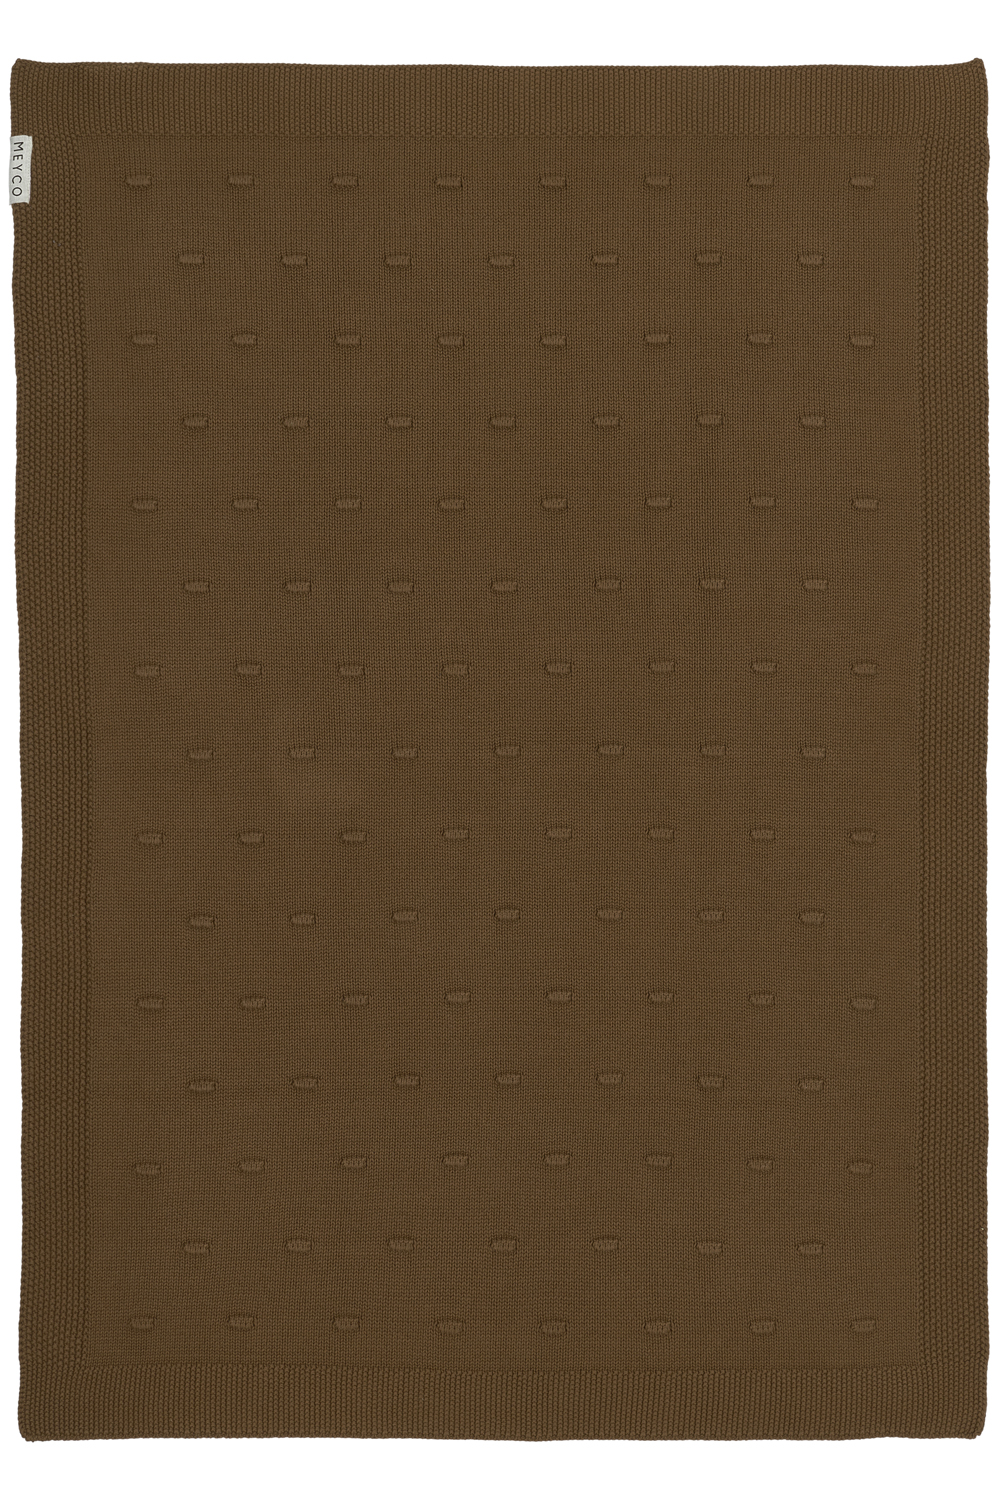 Ledikant deken Knots - chocolate - 100x150cm